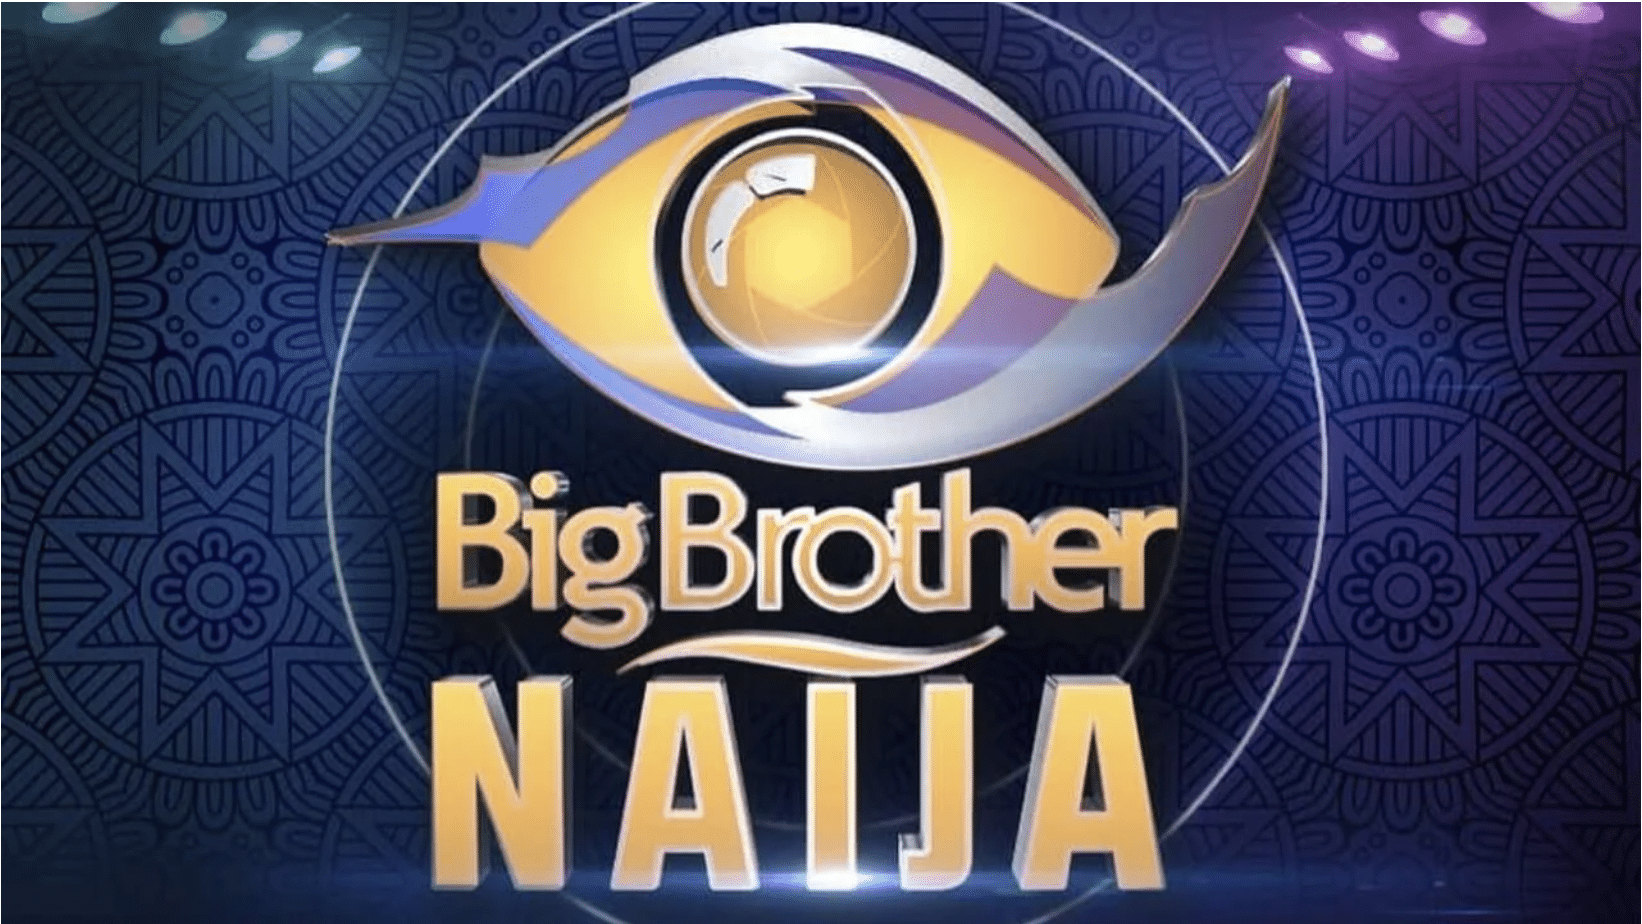 Big Brother Naija